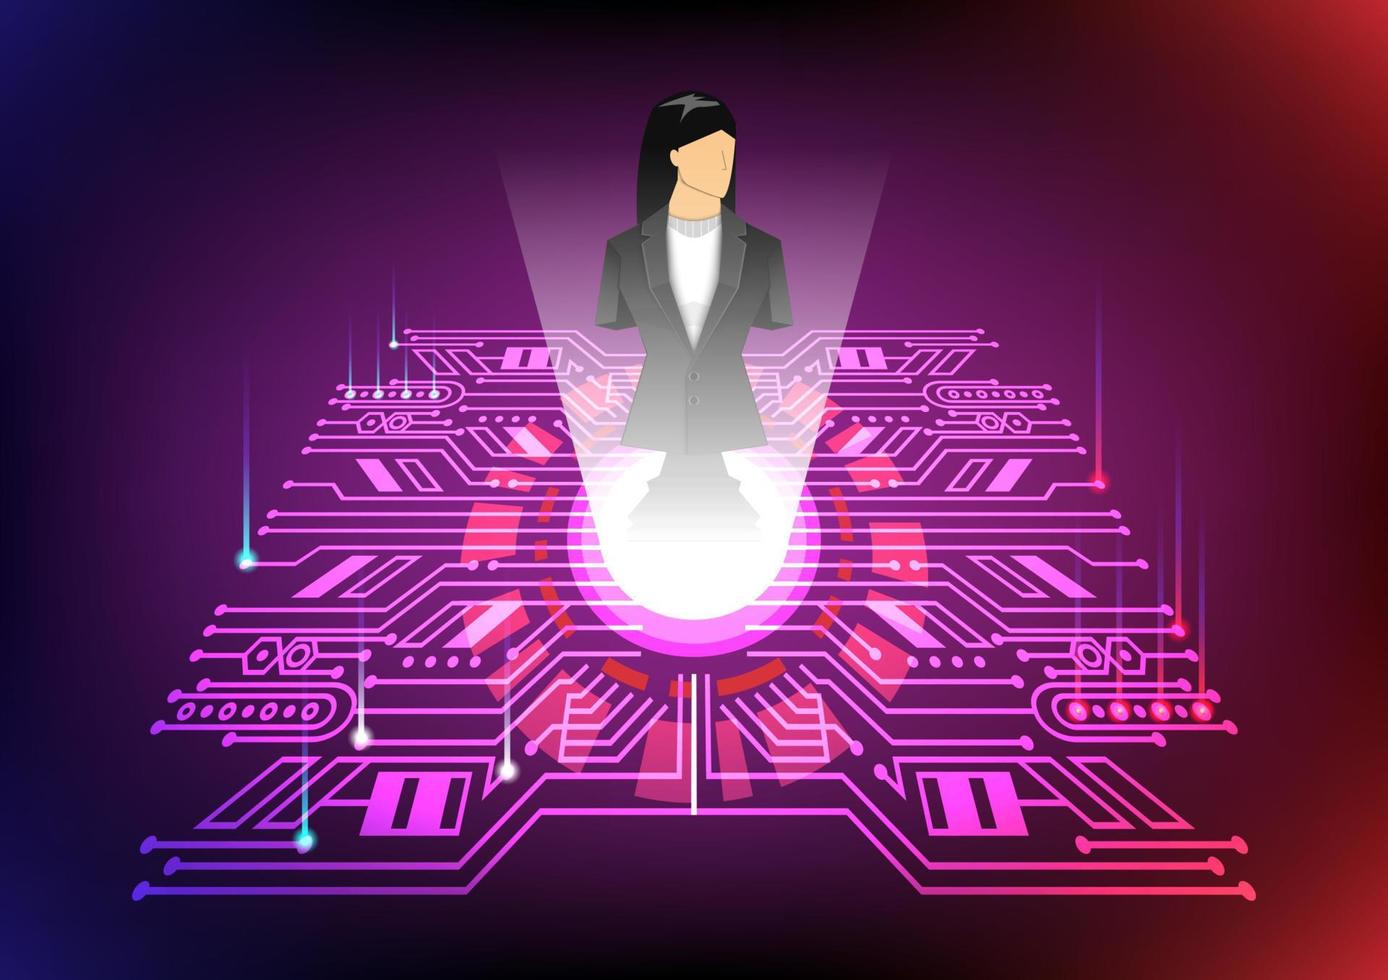 leadership concept, black-chess-businesswoman, blue and red light hitech background, vector illustrator